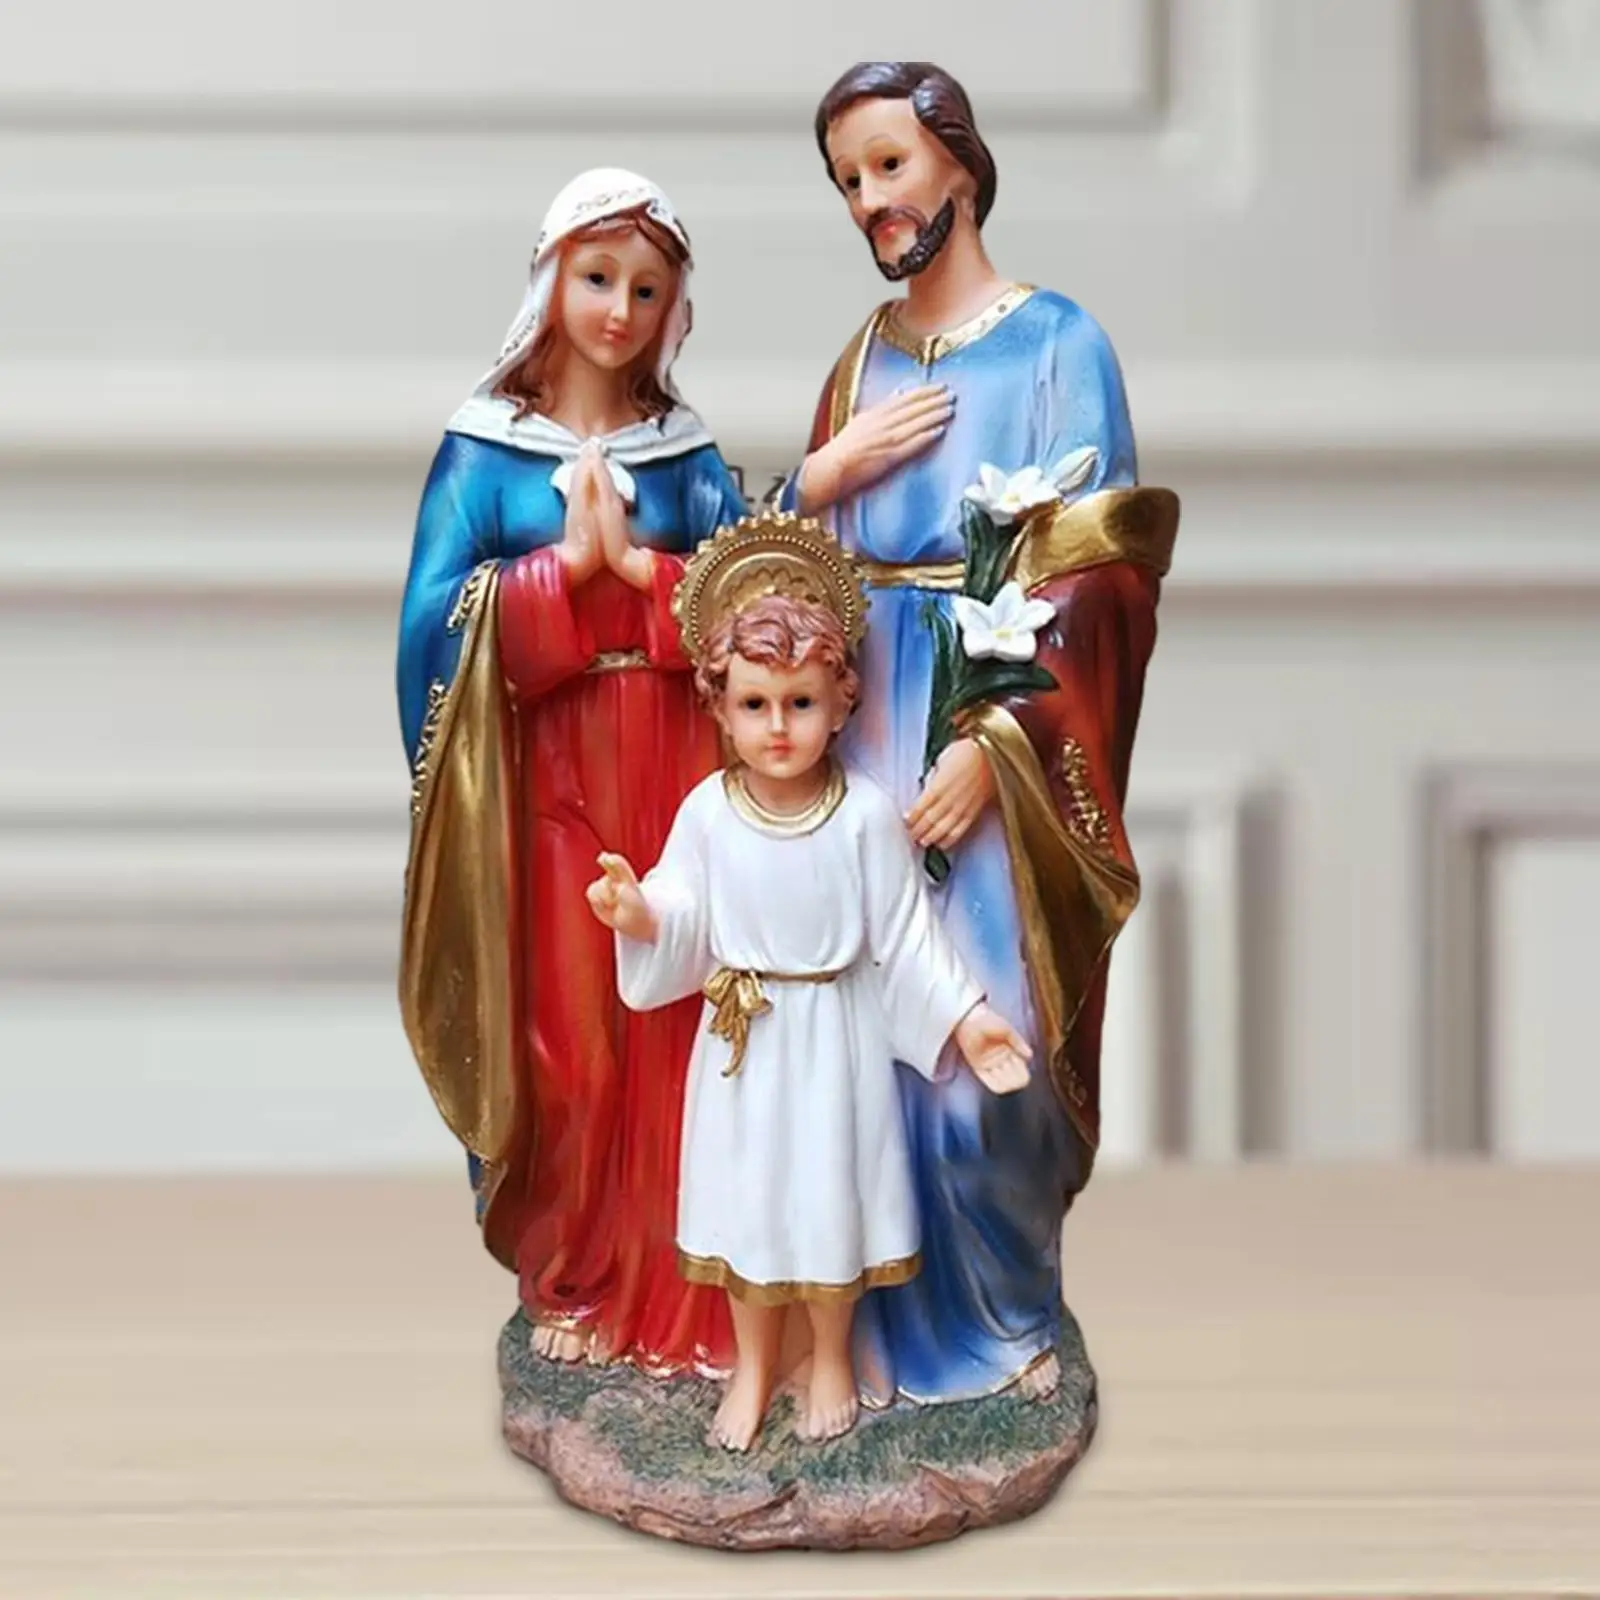 Holy Family Statue Jesus Mary Joseph Figurine Ornament Christian Gifts Virgin Mary Joseph Jesus Figures for Car Interior Desktop